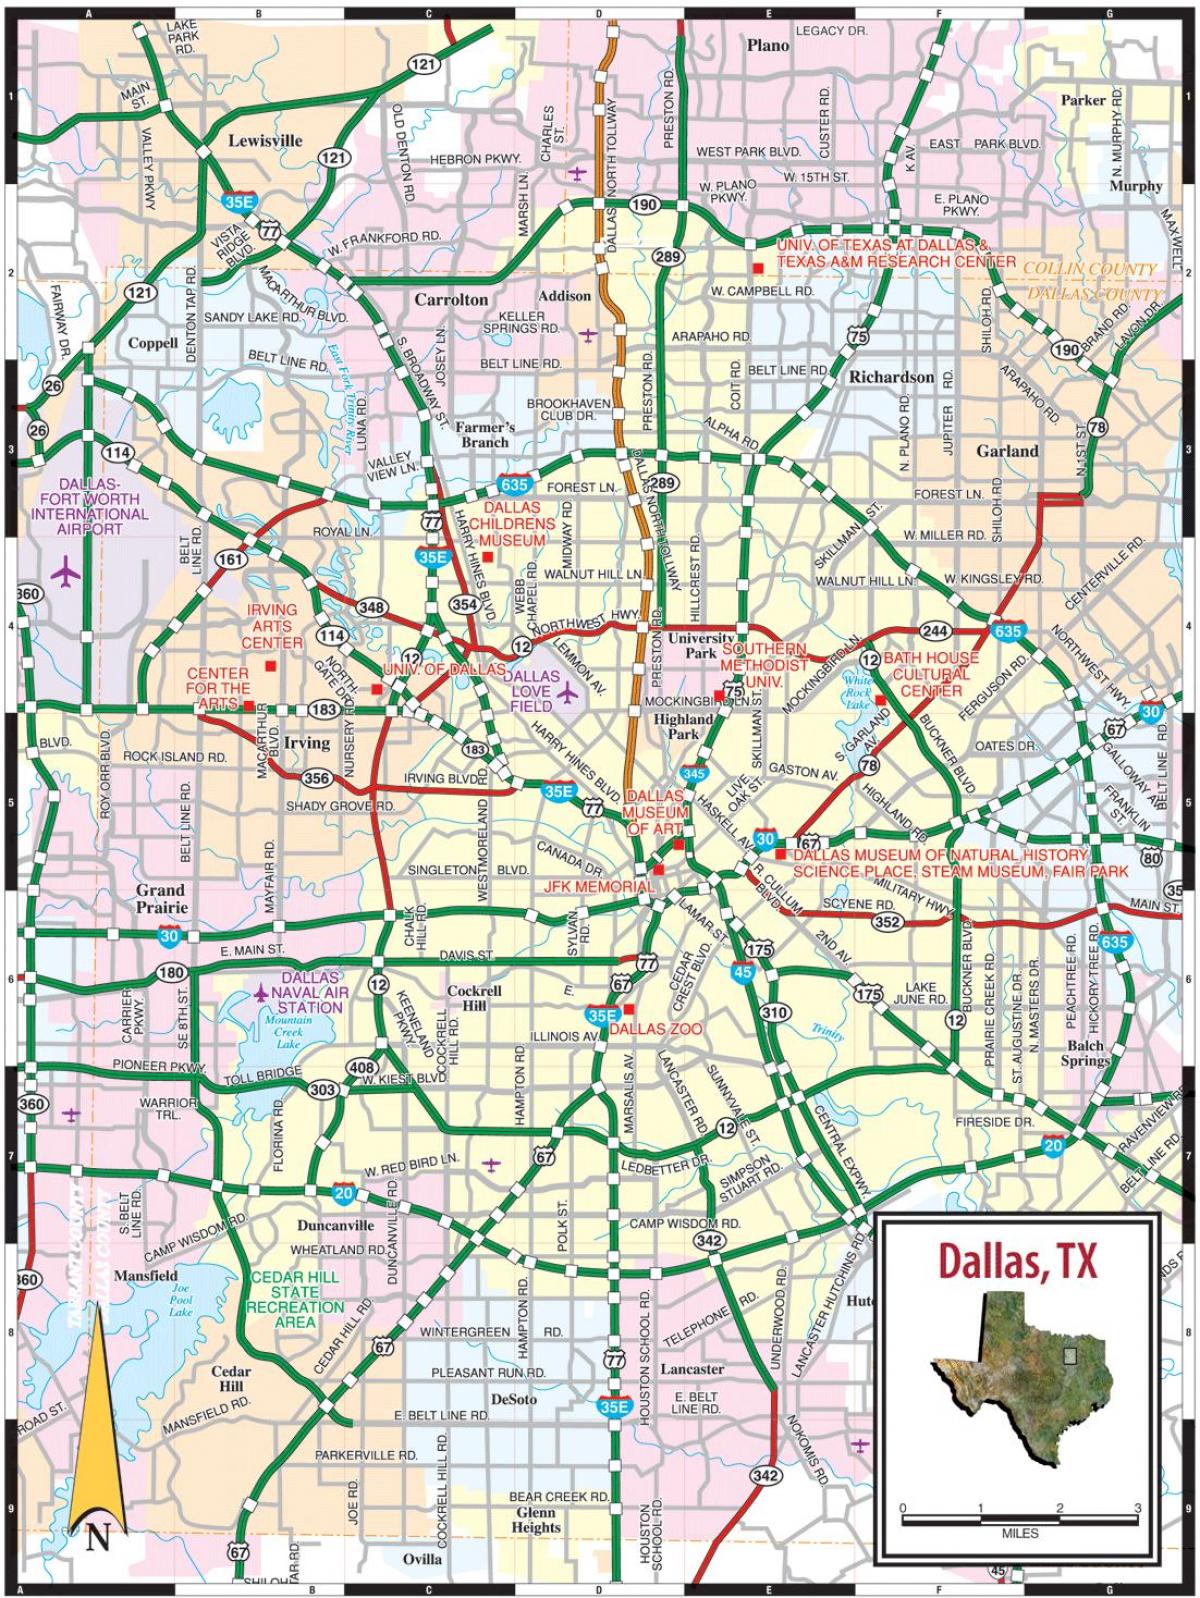 карта на Далас tx